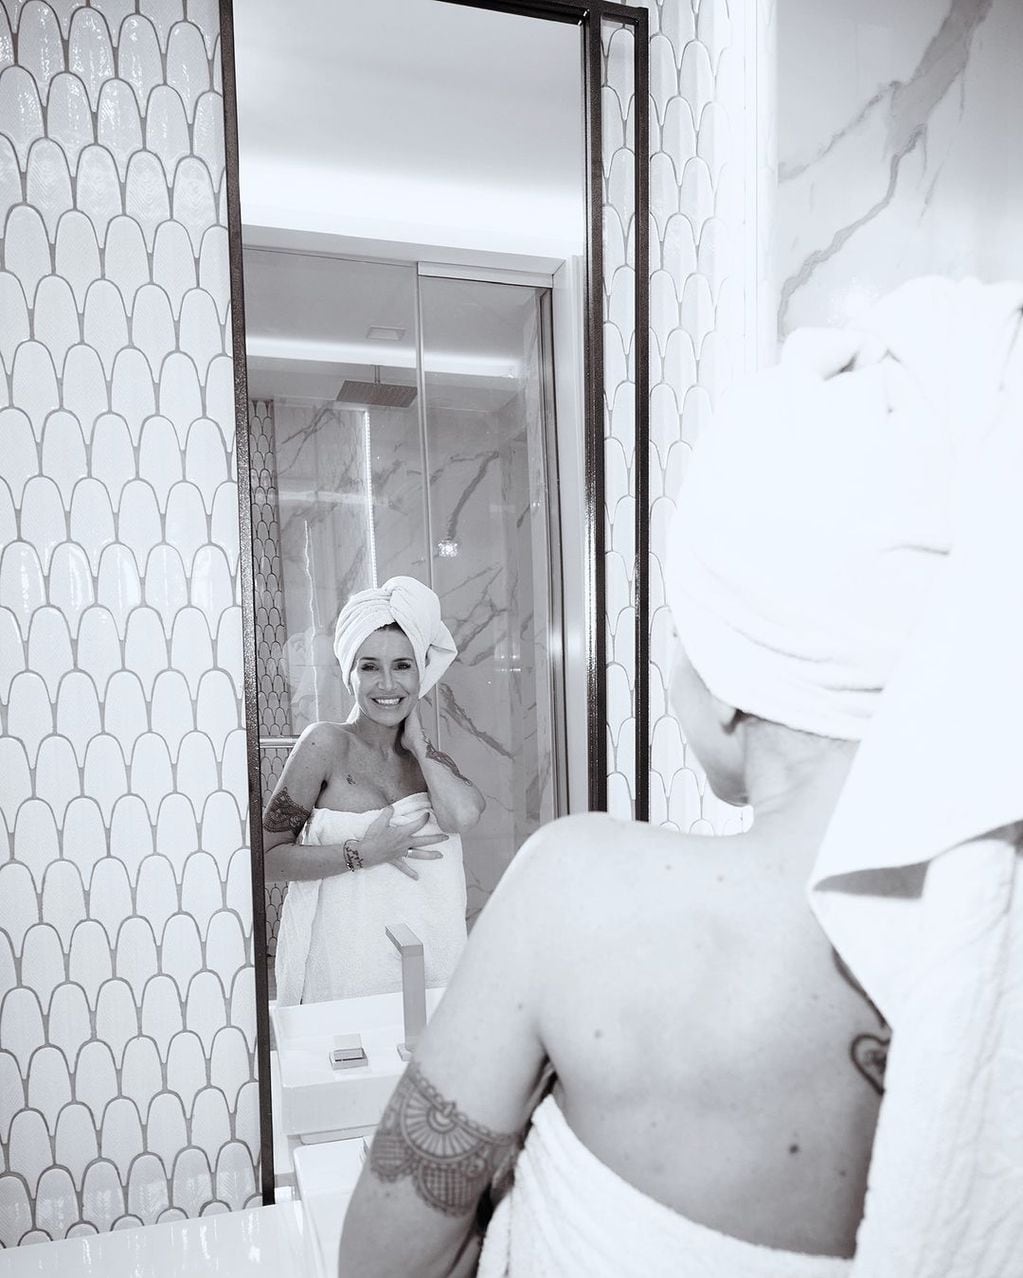 Al desnudo, Flor Peña paralizó Instagram posando frente al espejo